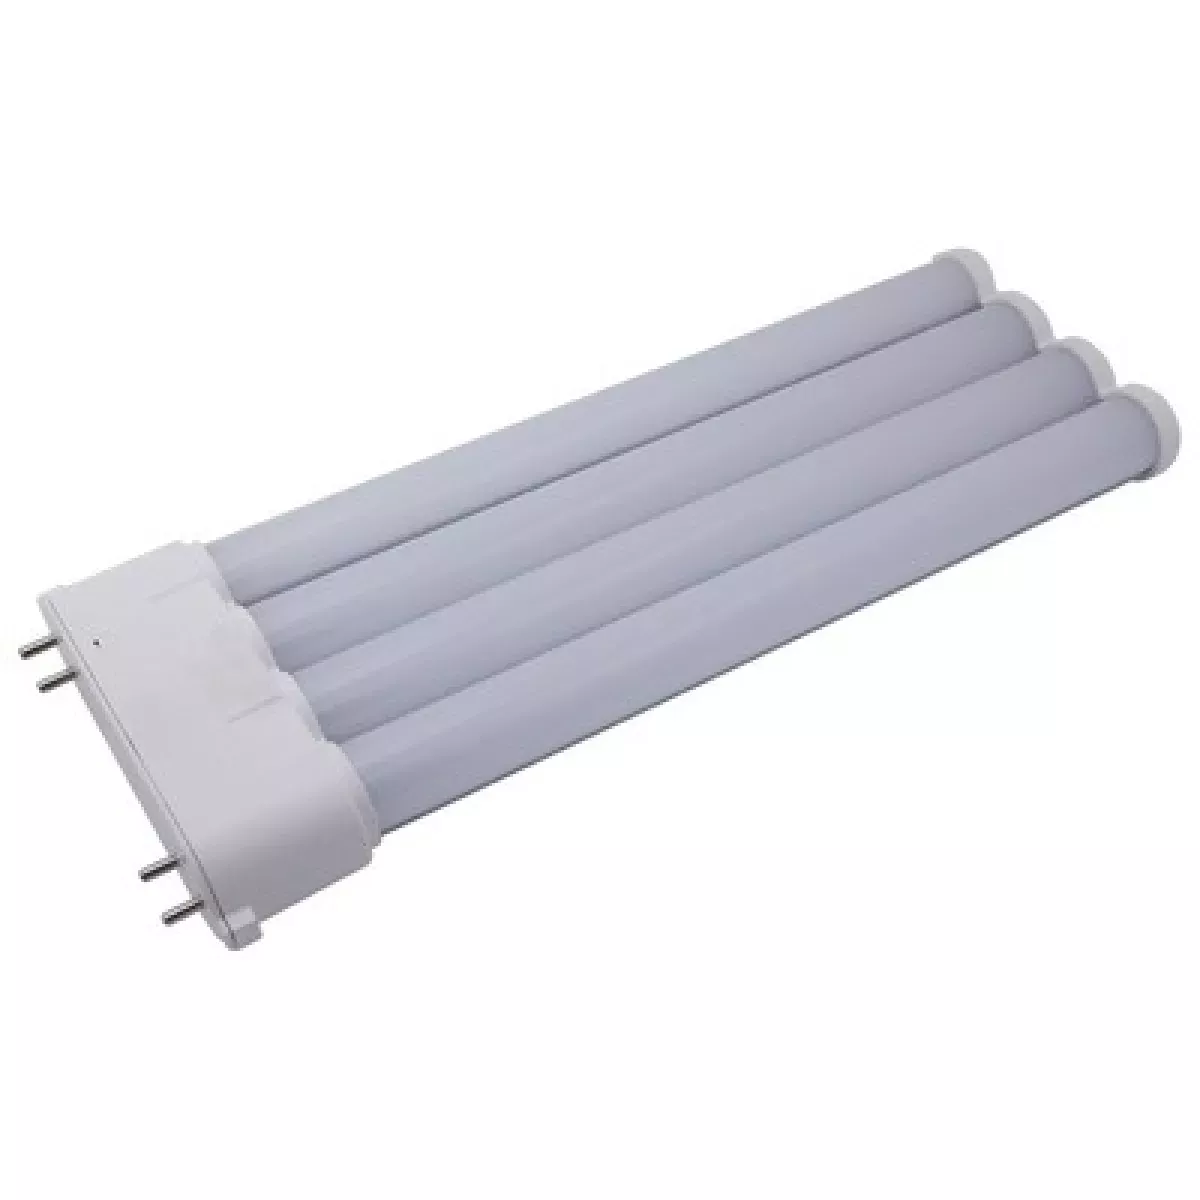 #3 - LEDlife 2G10-PRO23 - LED lysstofrør, 18W, 23cm, 2G10, 155lm/w - Kulør : Varm